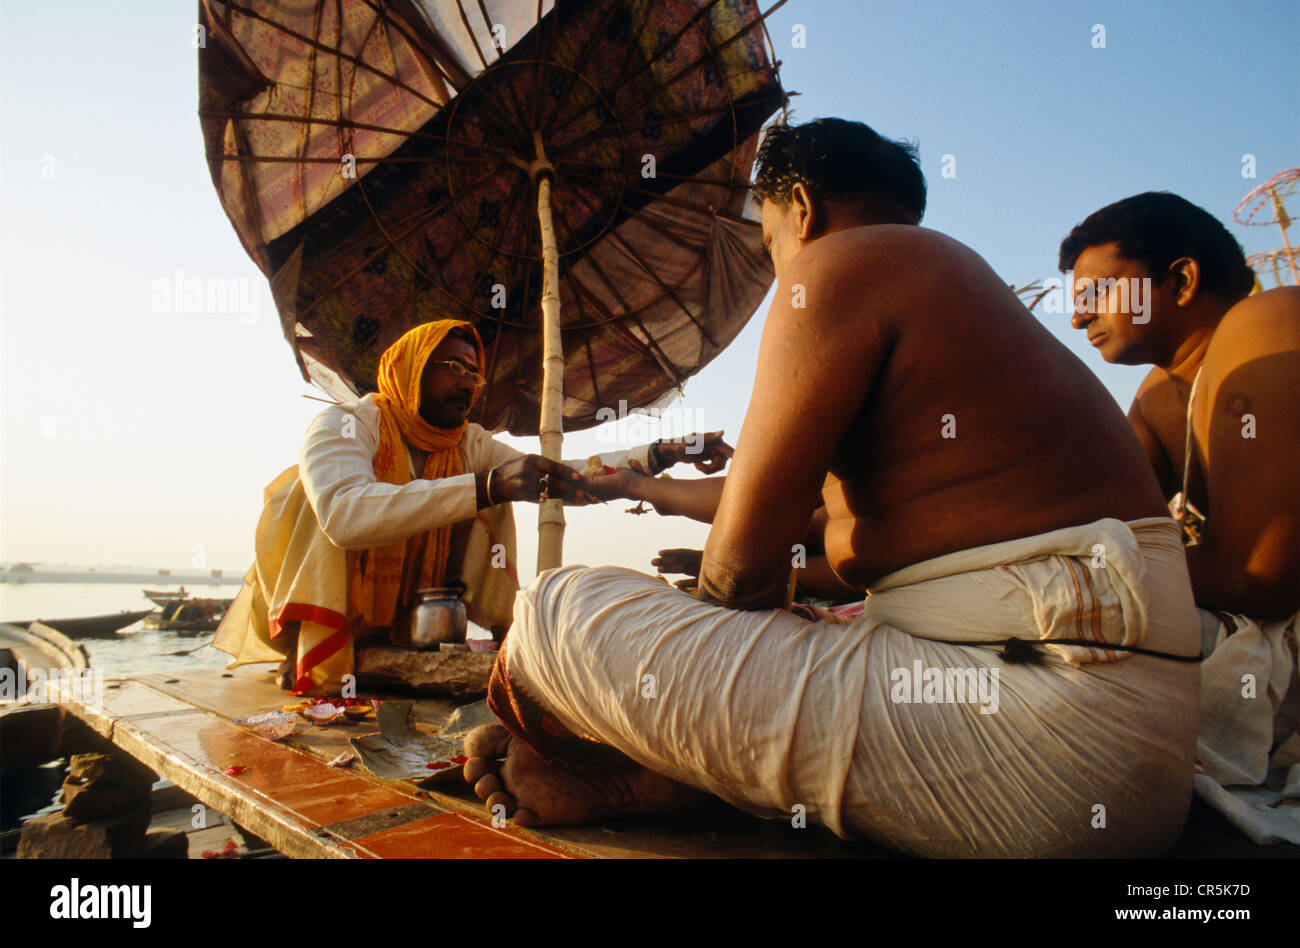 Priest offering ceremonies and blessings to pilgrims, Varanasi, Uttar Pradesh, India, Asia Stock Photo